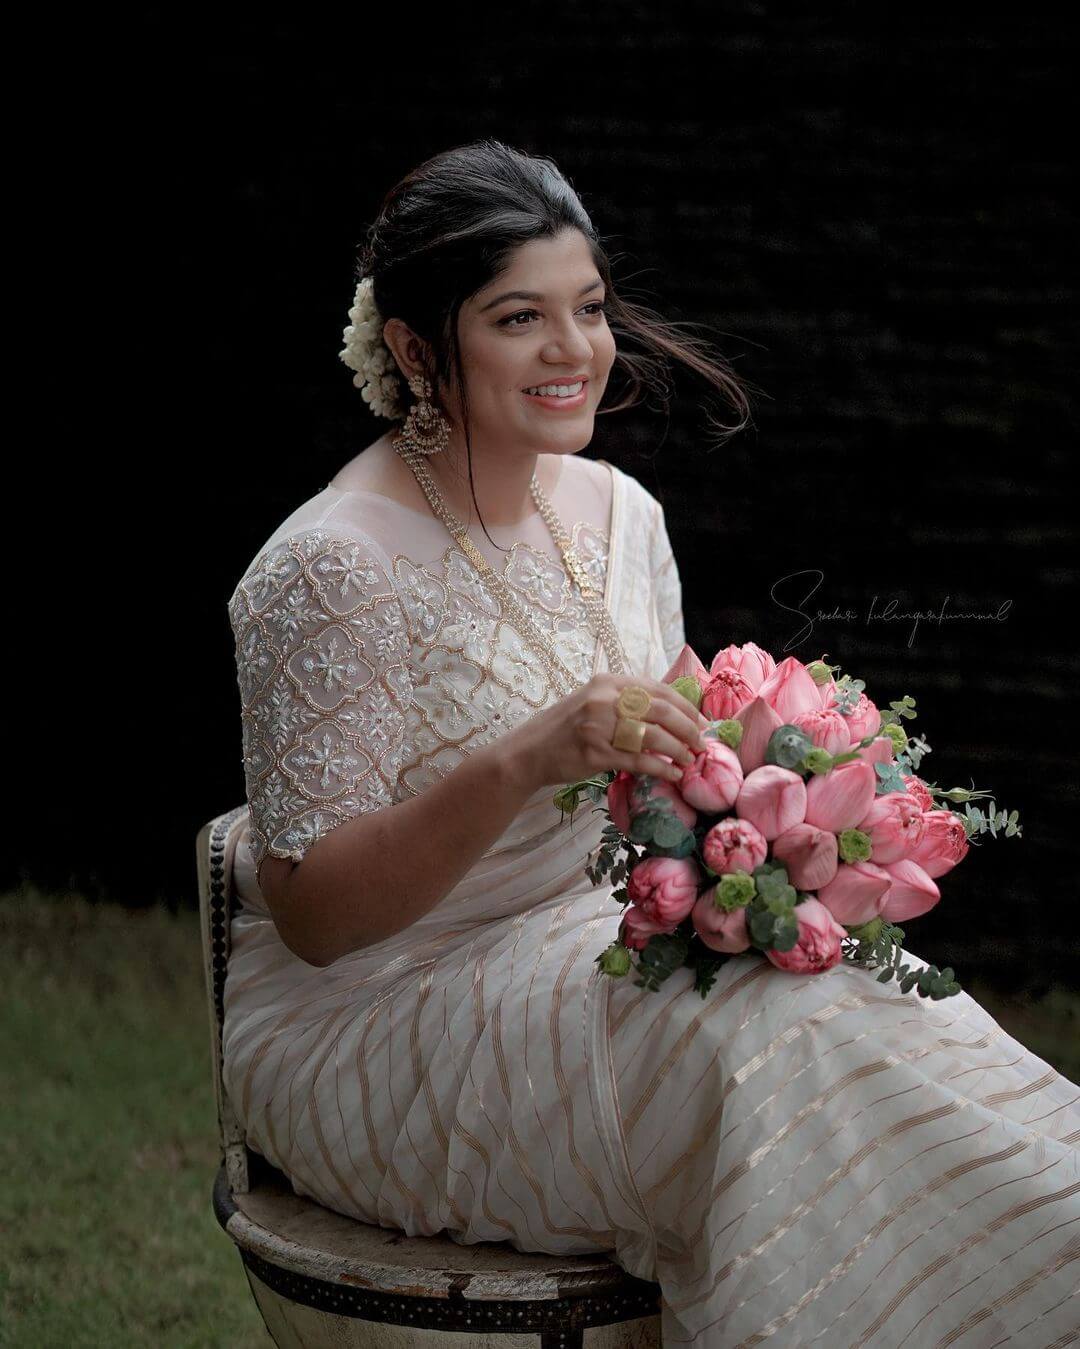 Aparna Balamurali Contemporary White Saree Look Is Perfect Bridesmaid Look